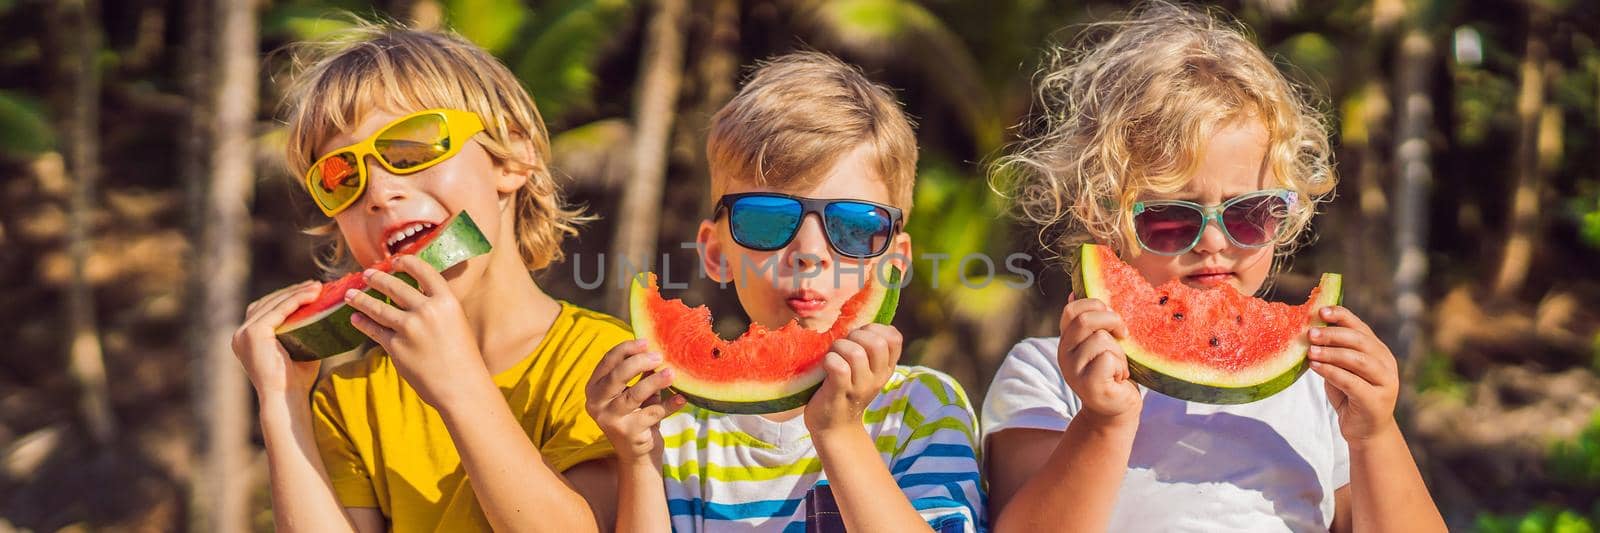 Children eat watermelon on the beach in sunglasses BANNER, LONG FORMAT by galitskaya